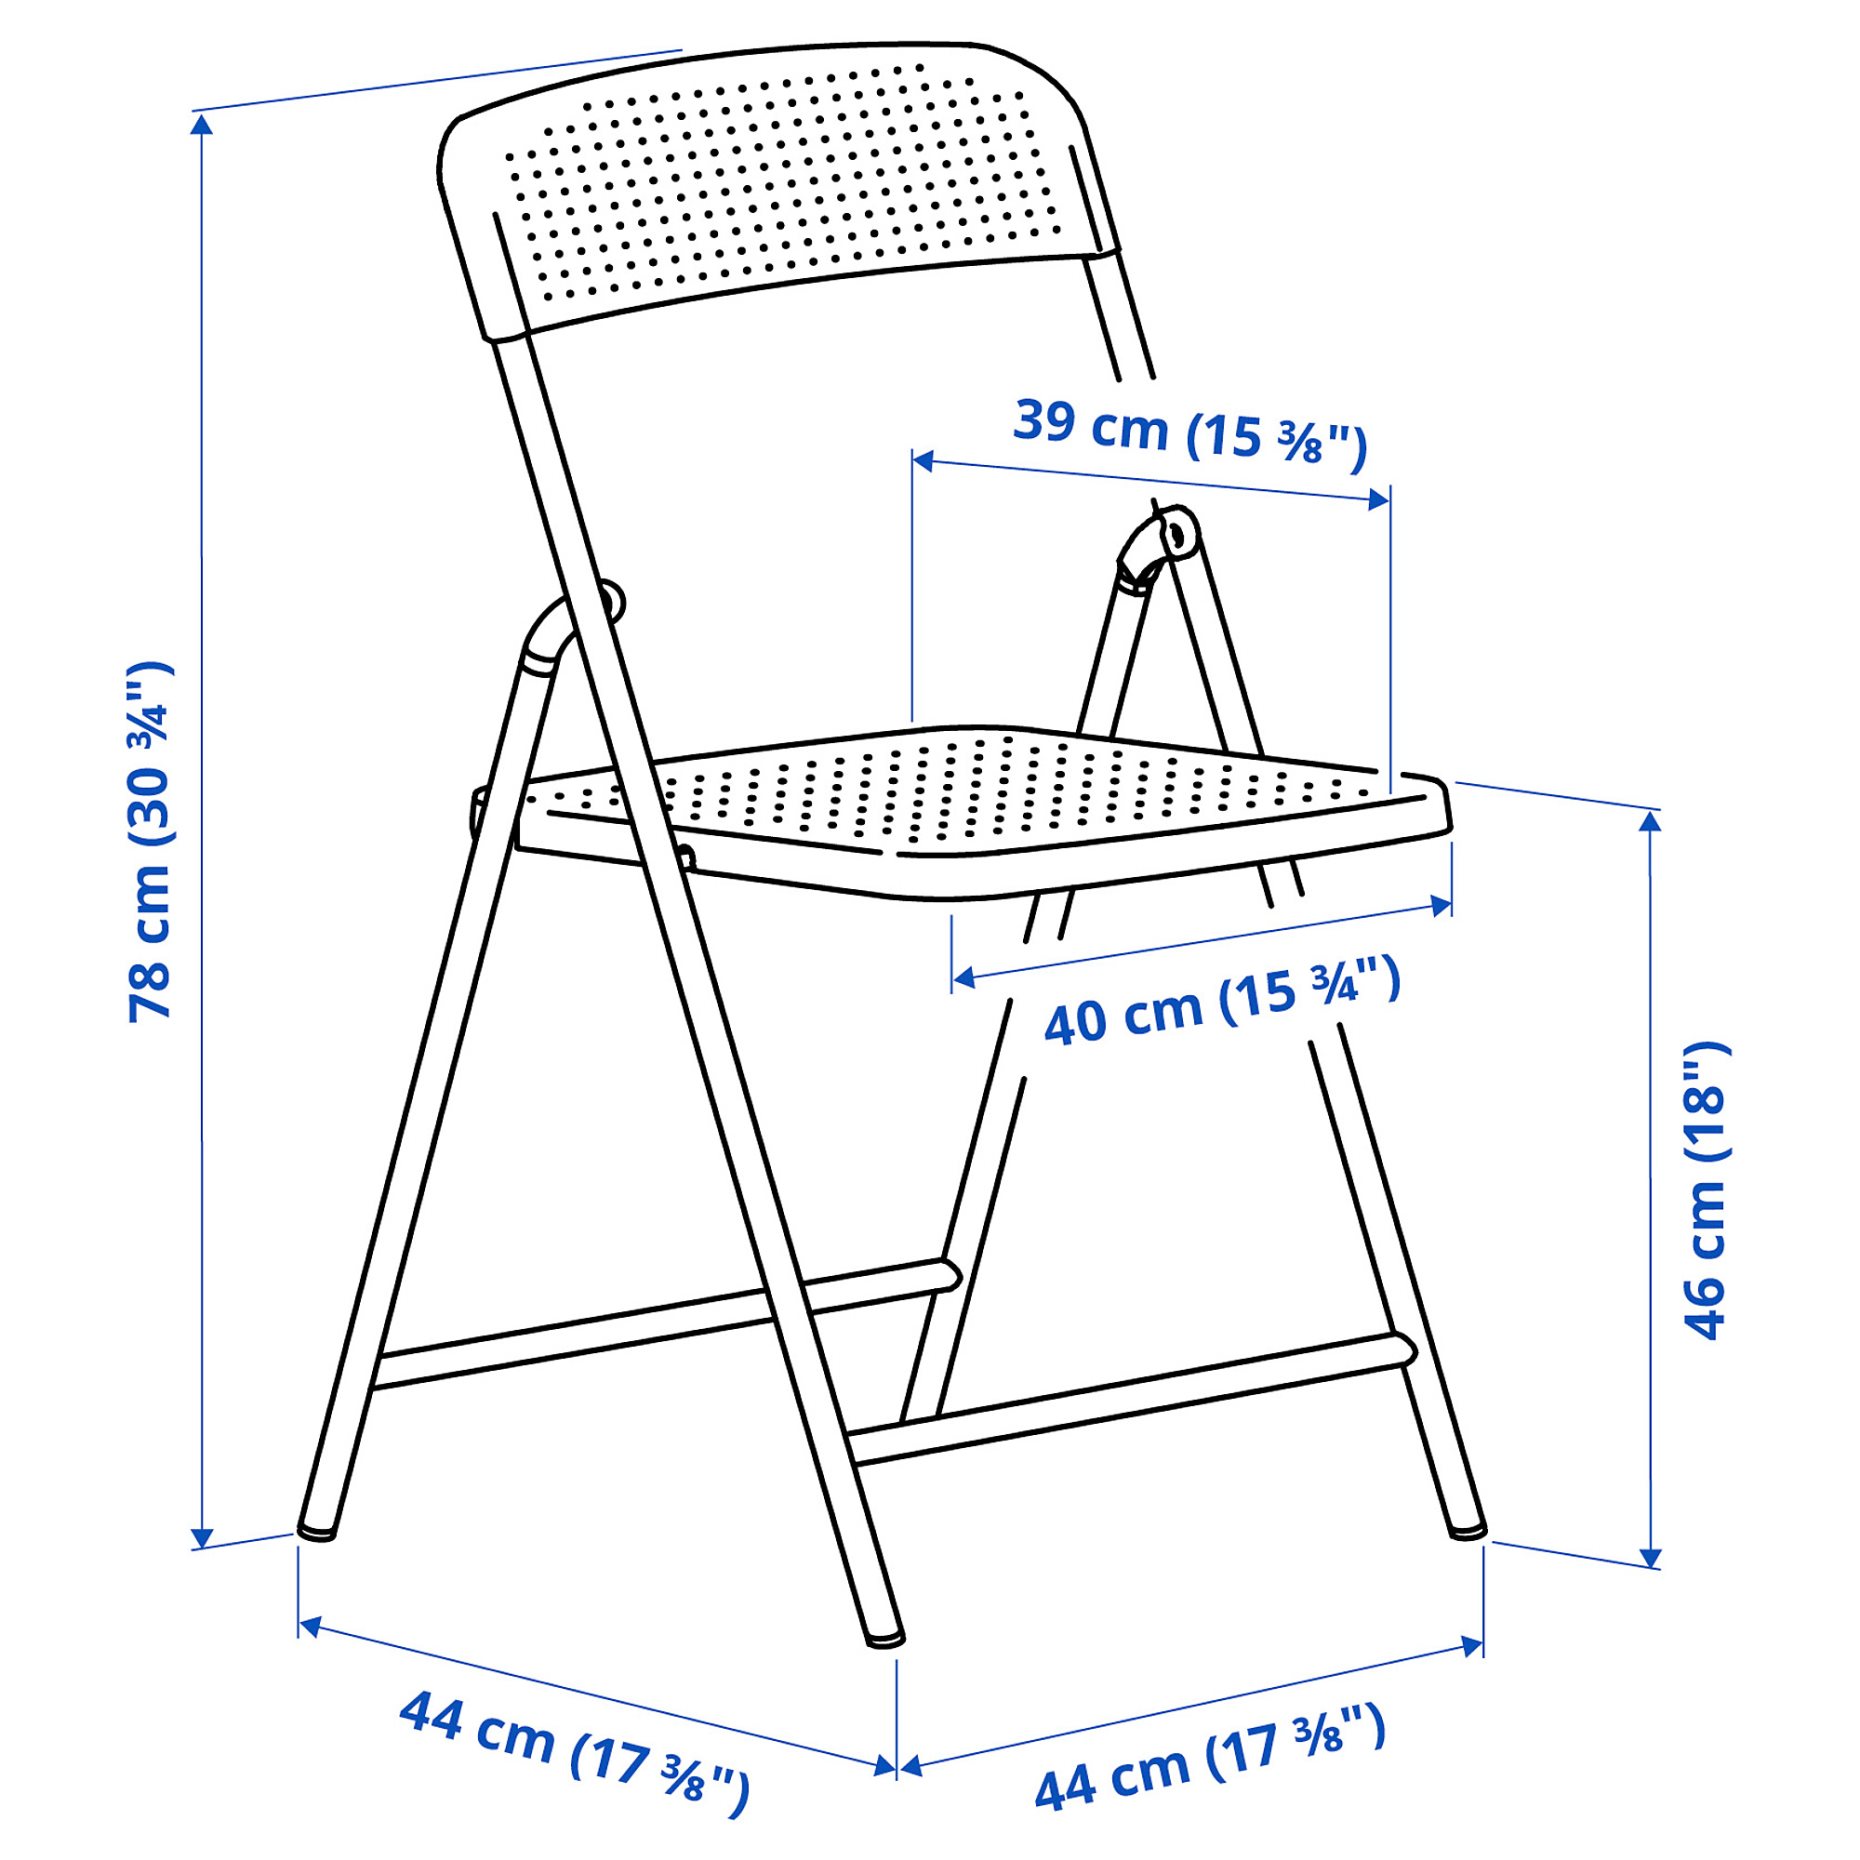 TORPARÖ, καρέκλα/πτυσσόμενο, εσωτερικού/εξωτερικού χώρου, 005.378.50